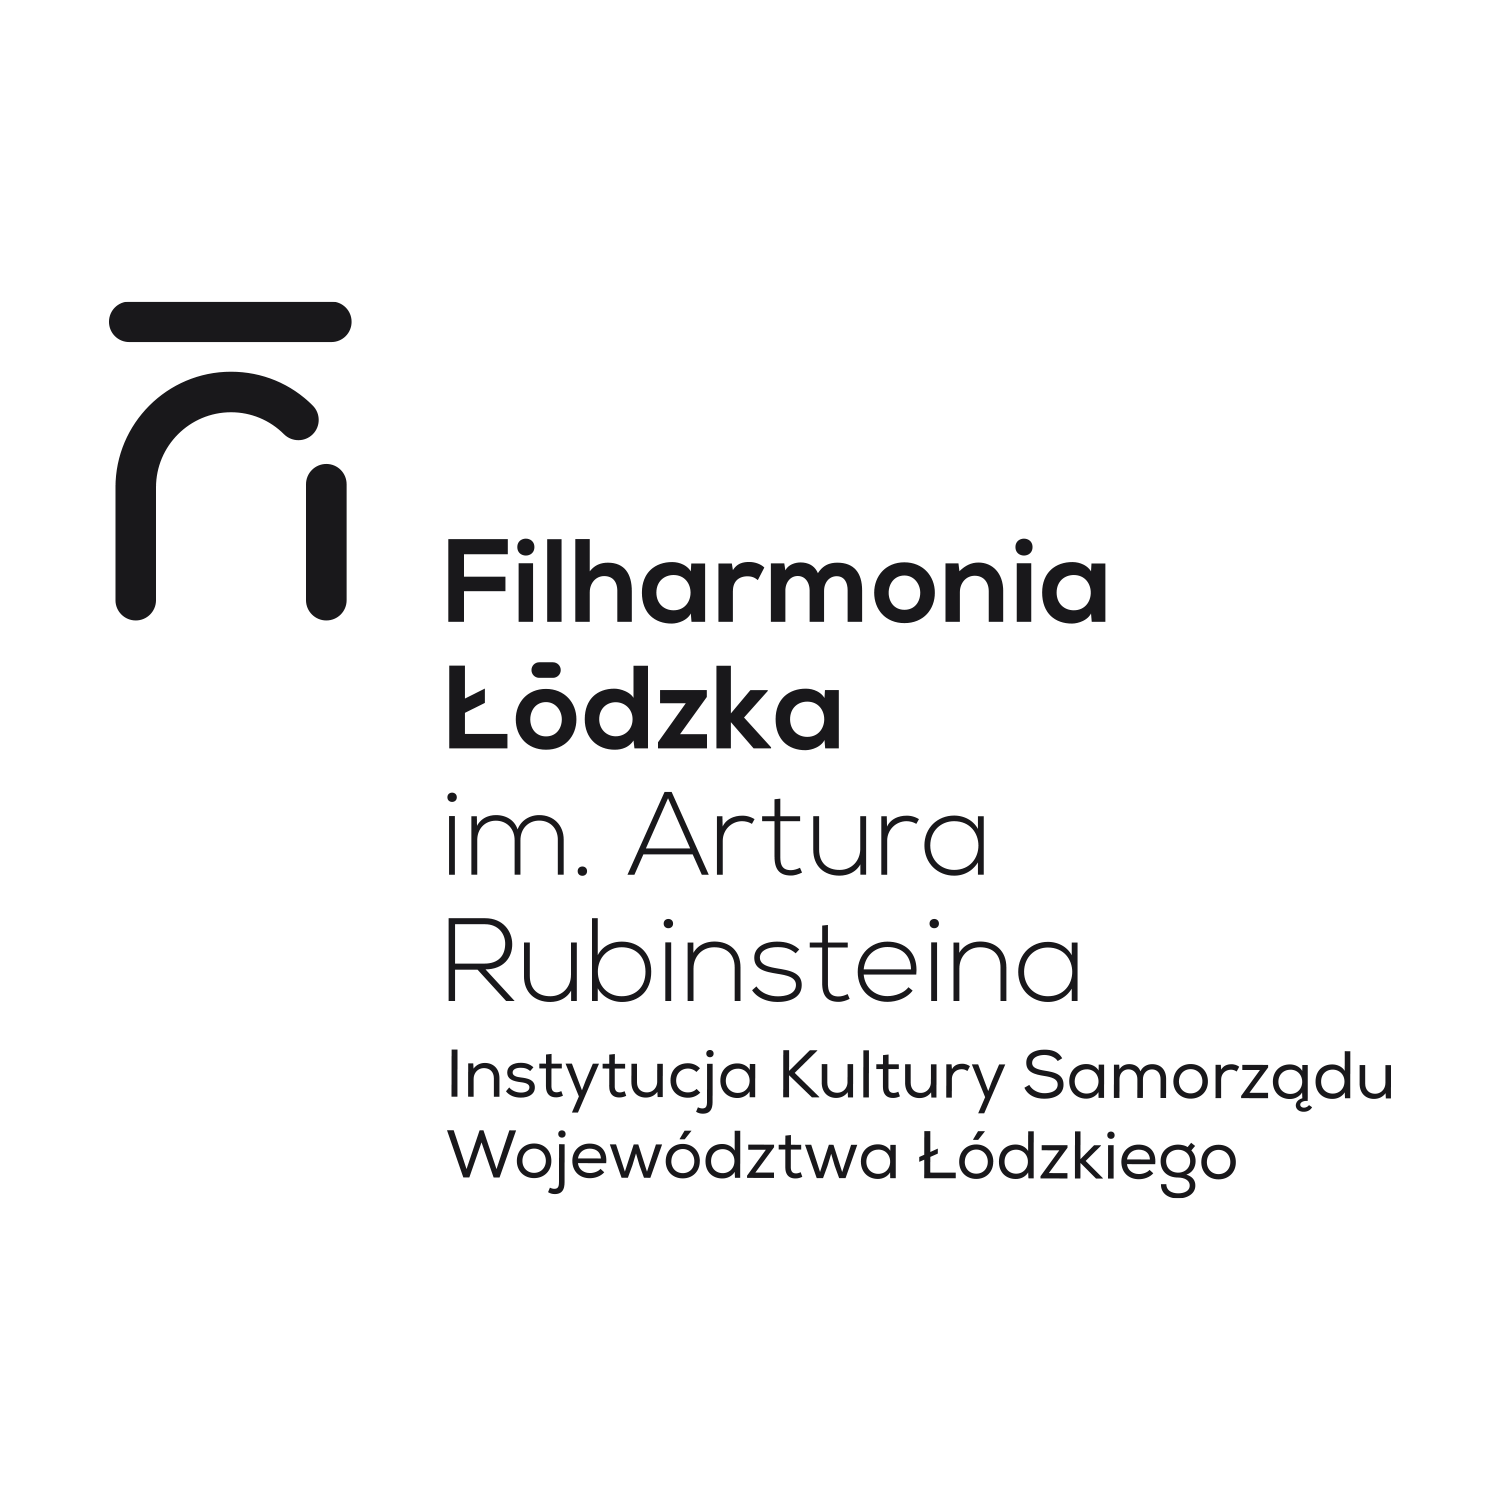 Filharmonia Łódzka